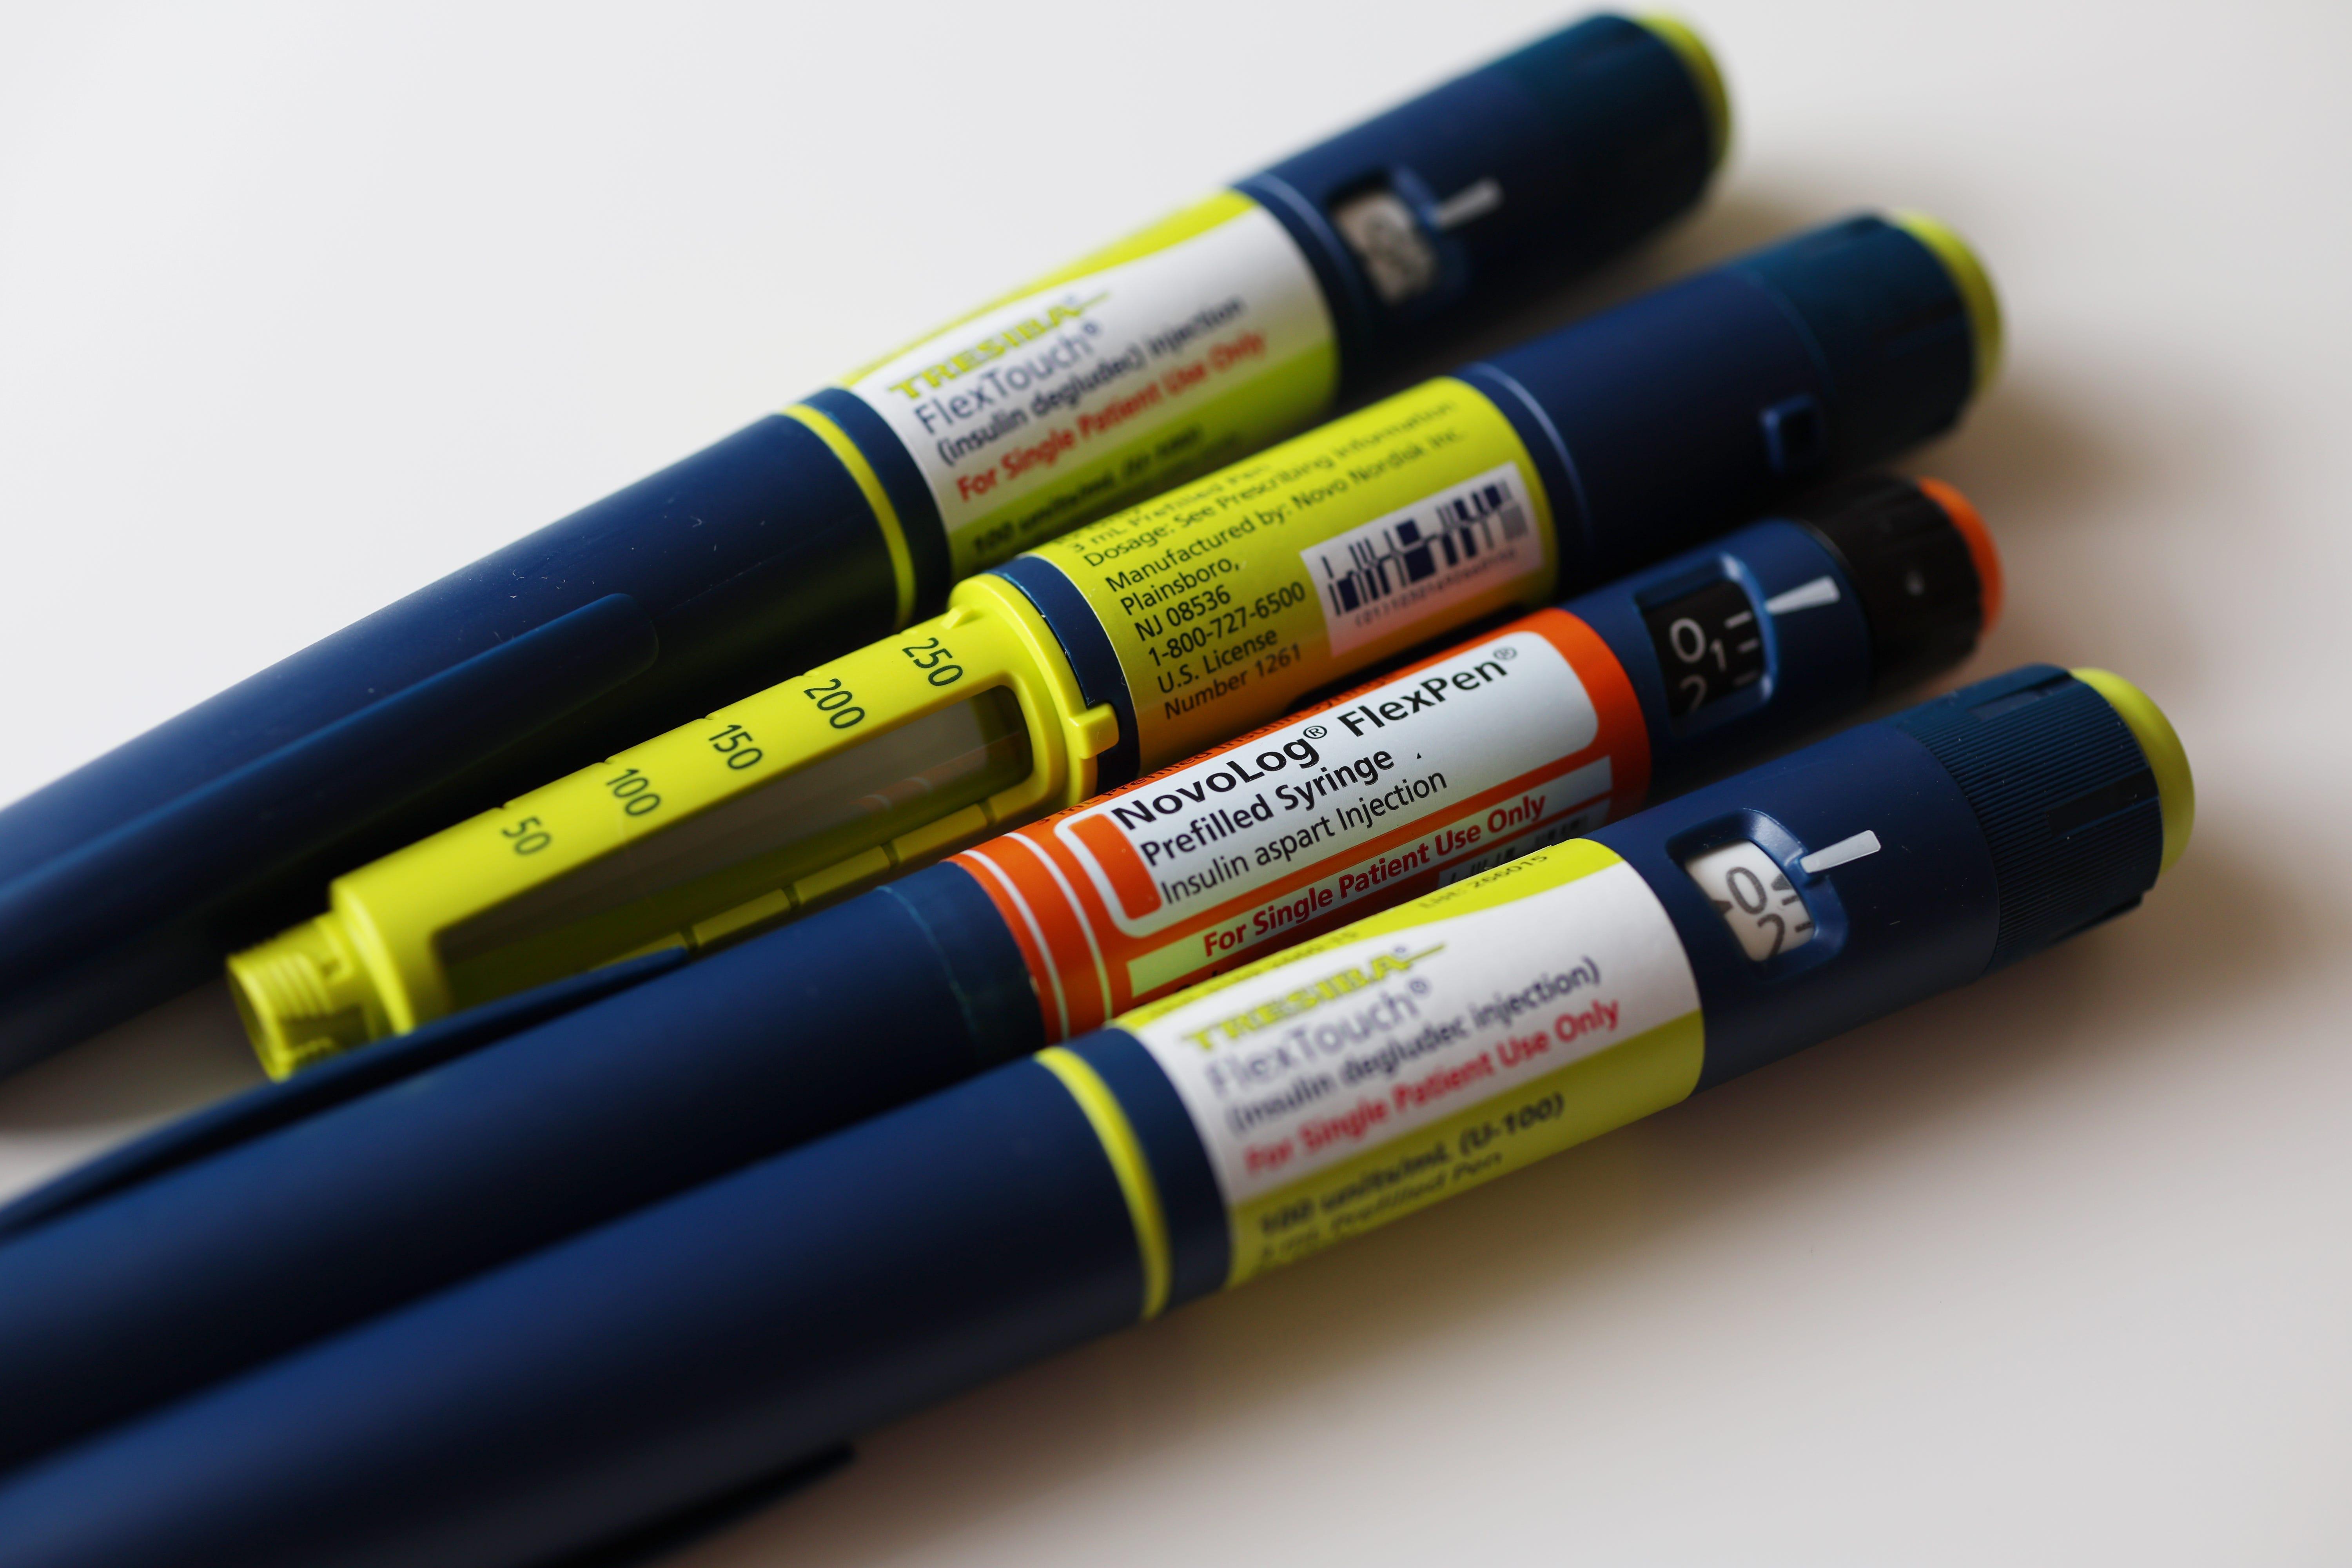 Several insulin pens manufactured by Novo Nordisk